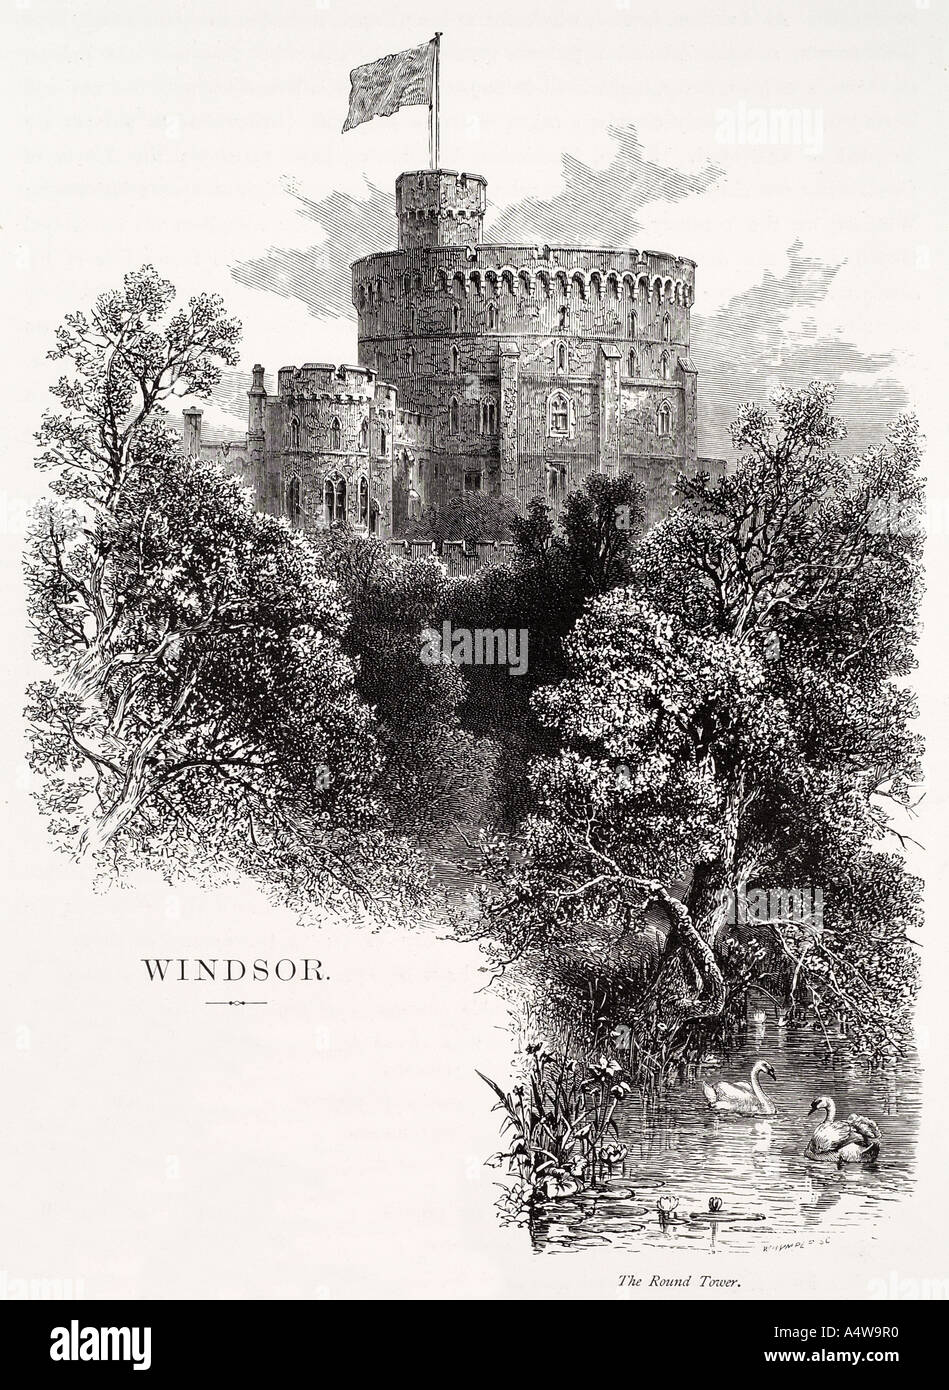 windsor castle round tower architecture Travel park tourism royal home portrait flag  England UK United Kingdom GB Great Britain Stock Photo